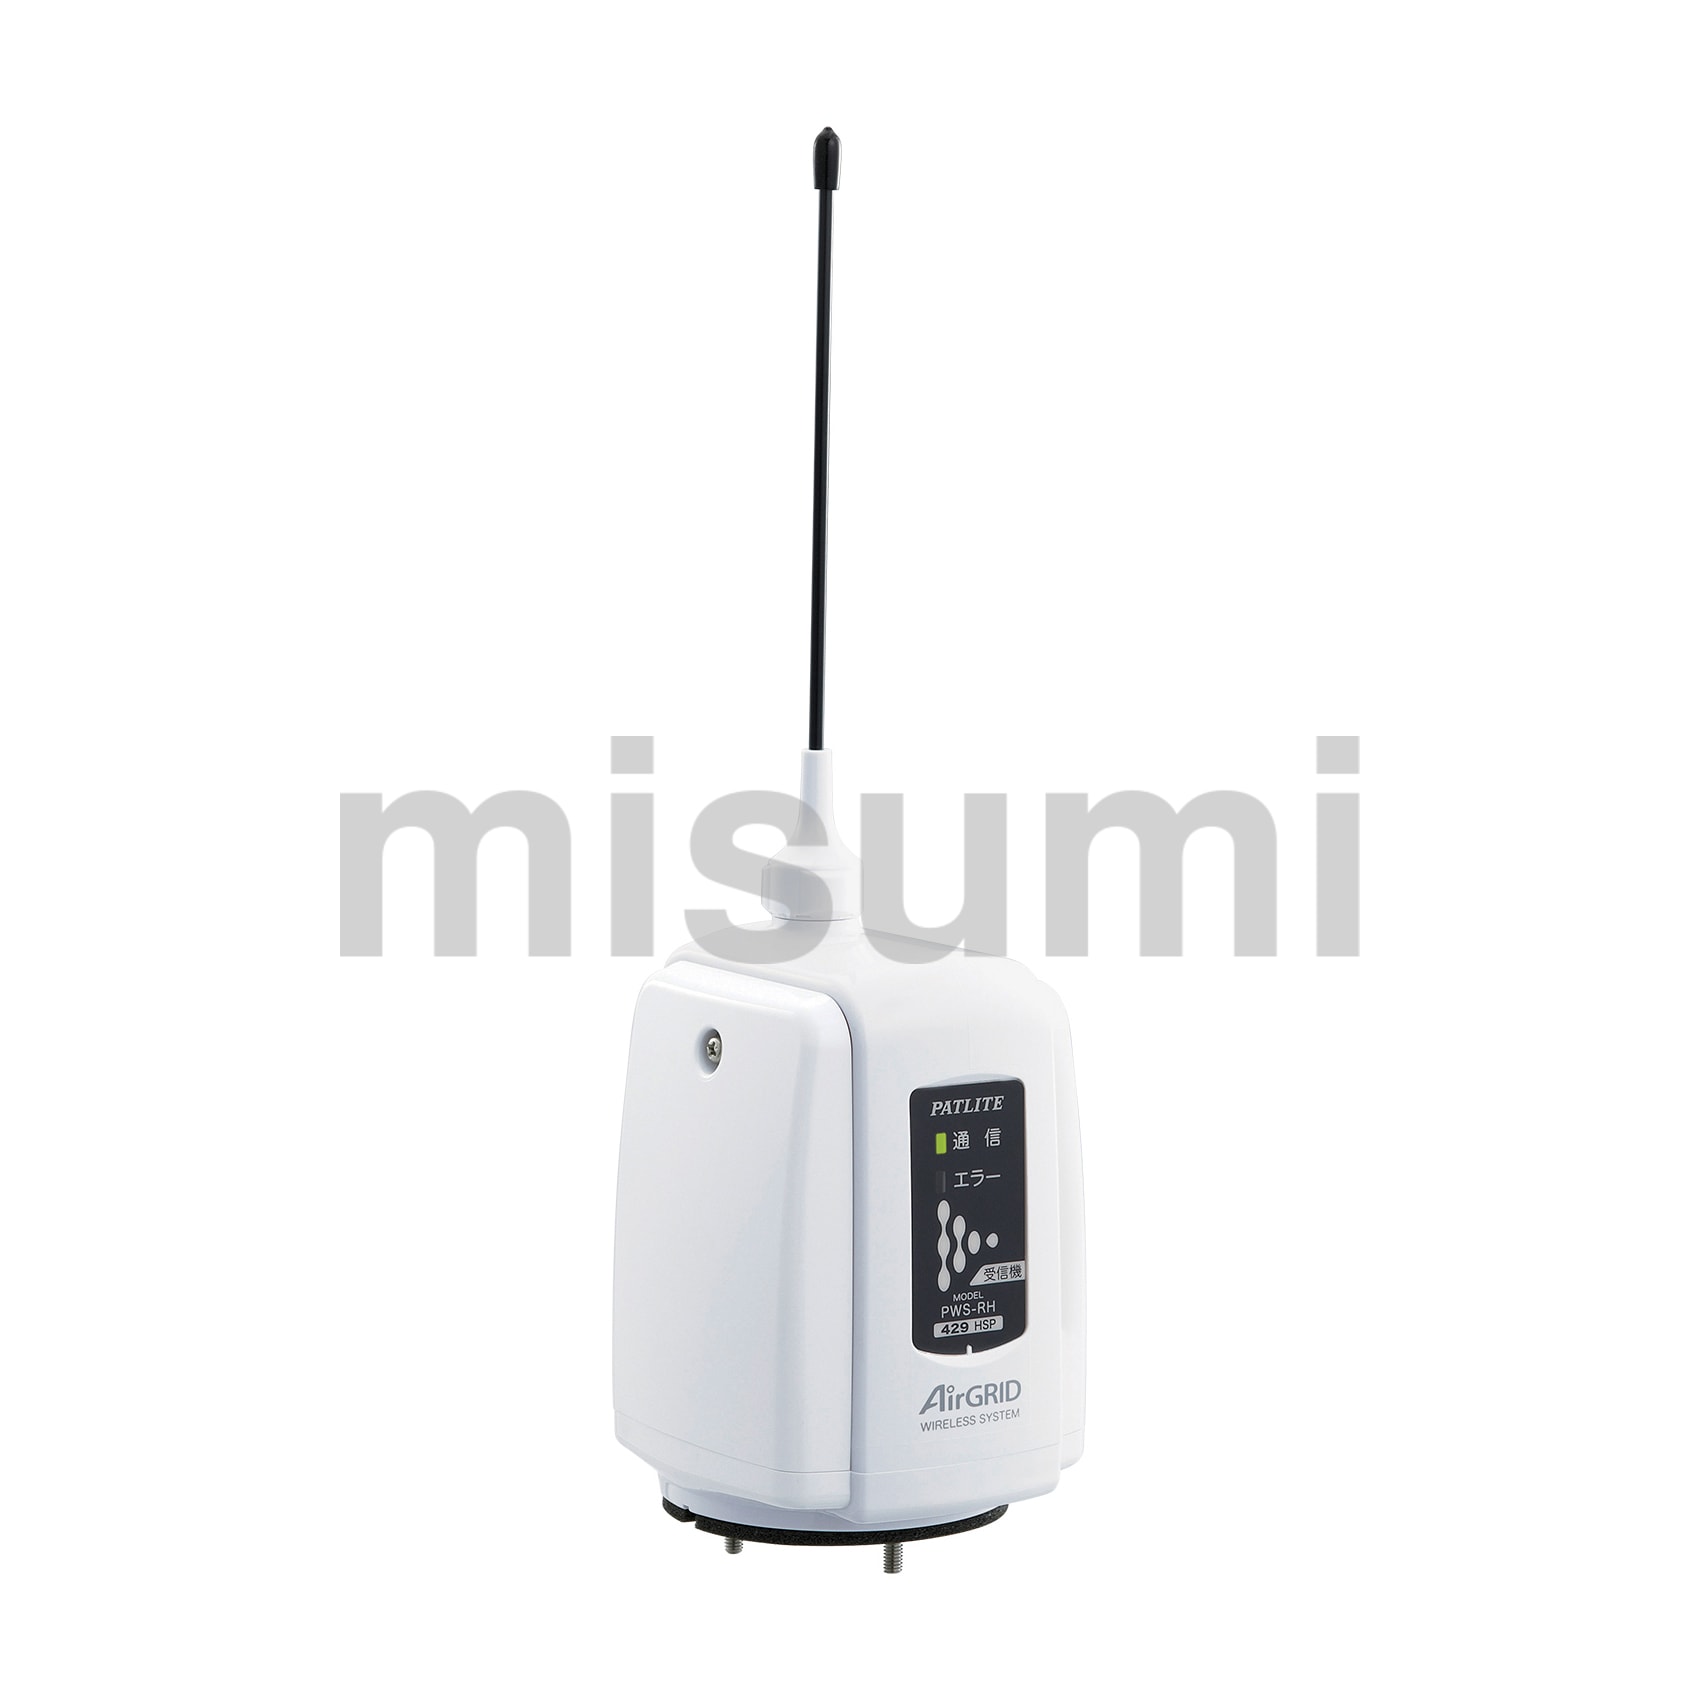 PWS-THP-W ワイヤレスコントロールユニット 送信機/受信機 AirGRID PWS パトライト MISUMI(ミスミ)